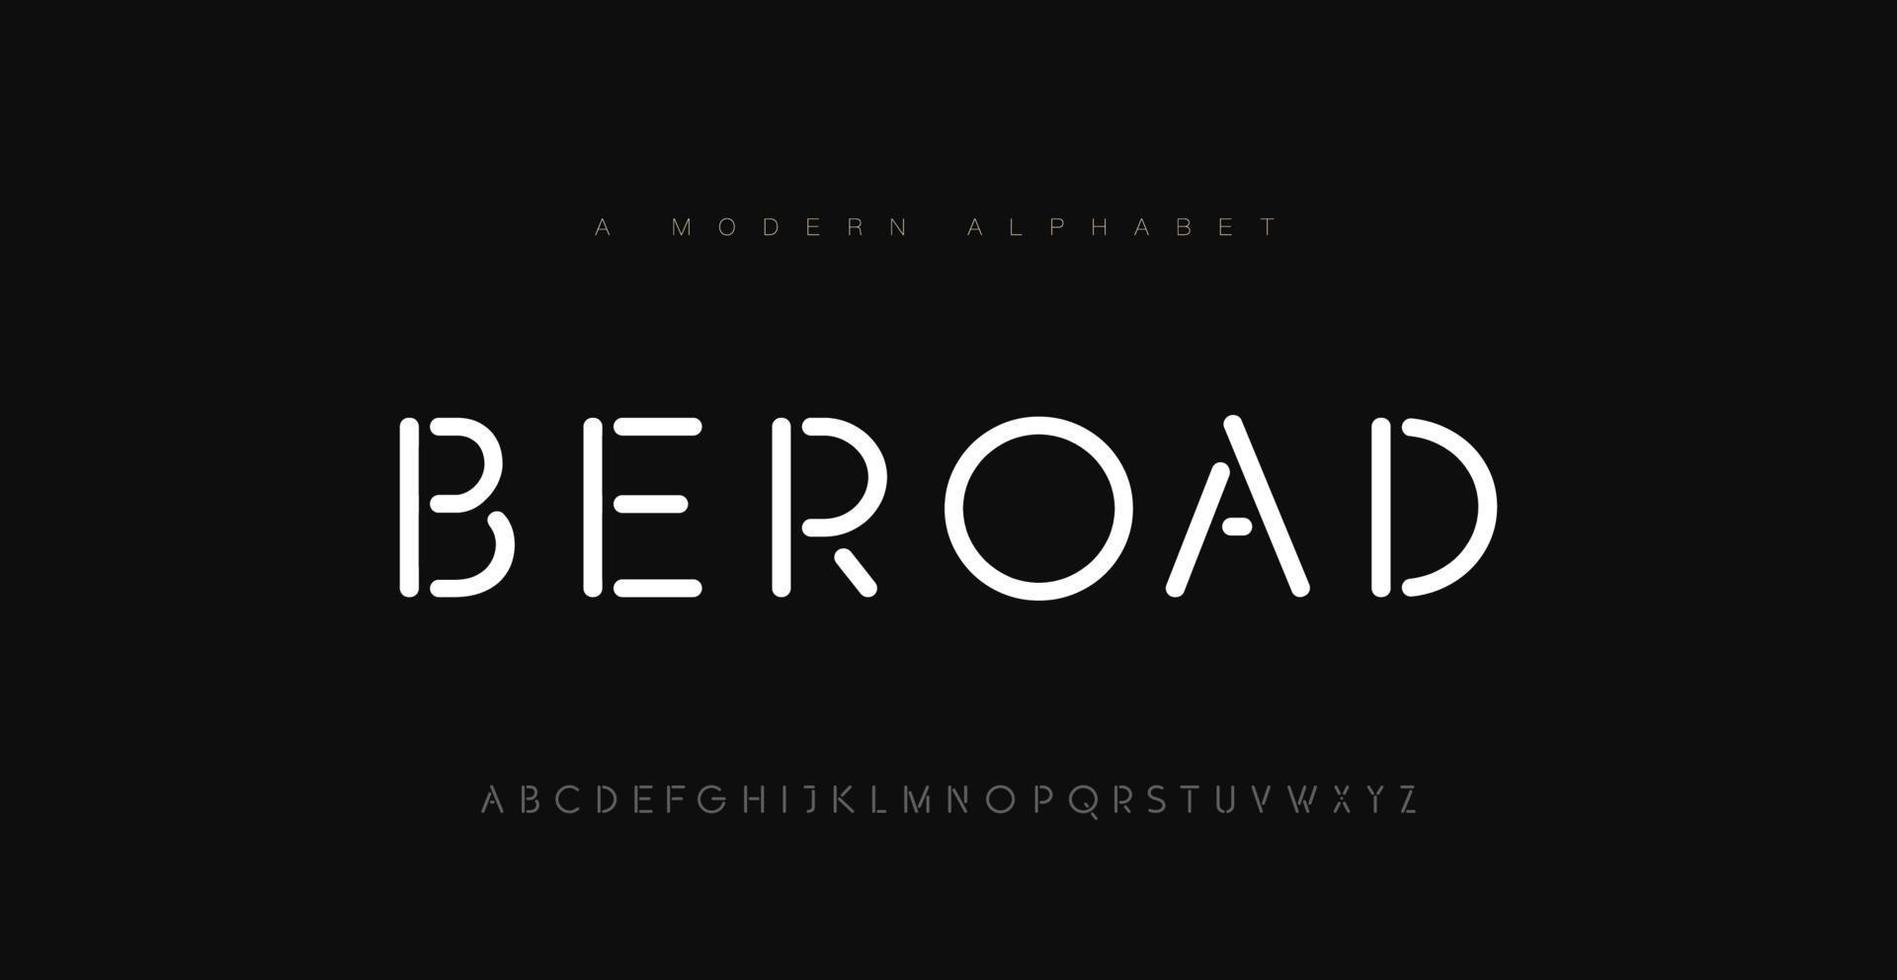 Minimal modern alphabet fonts. Typography minimalist urban digital neon electric future creative logo font vector